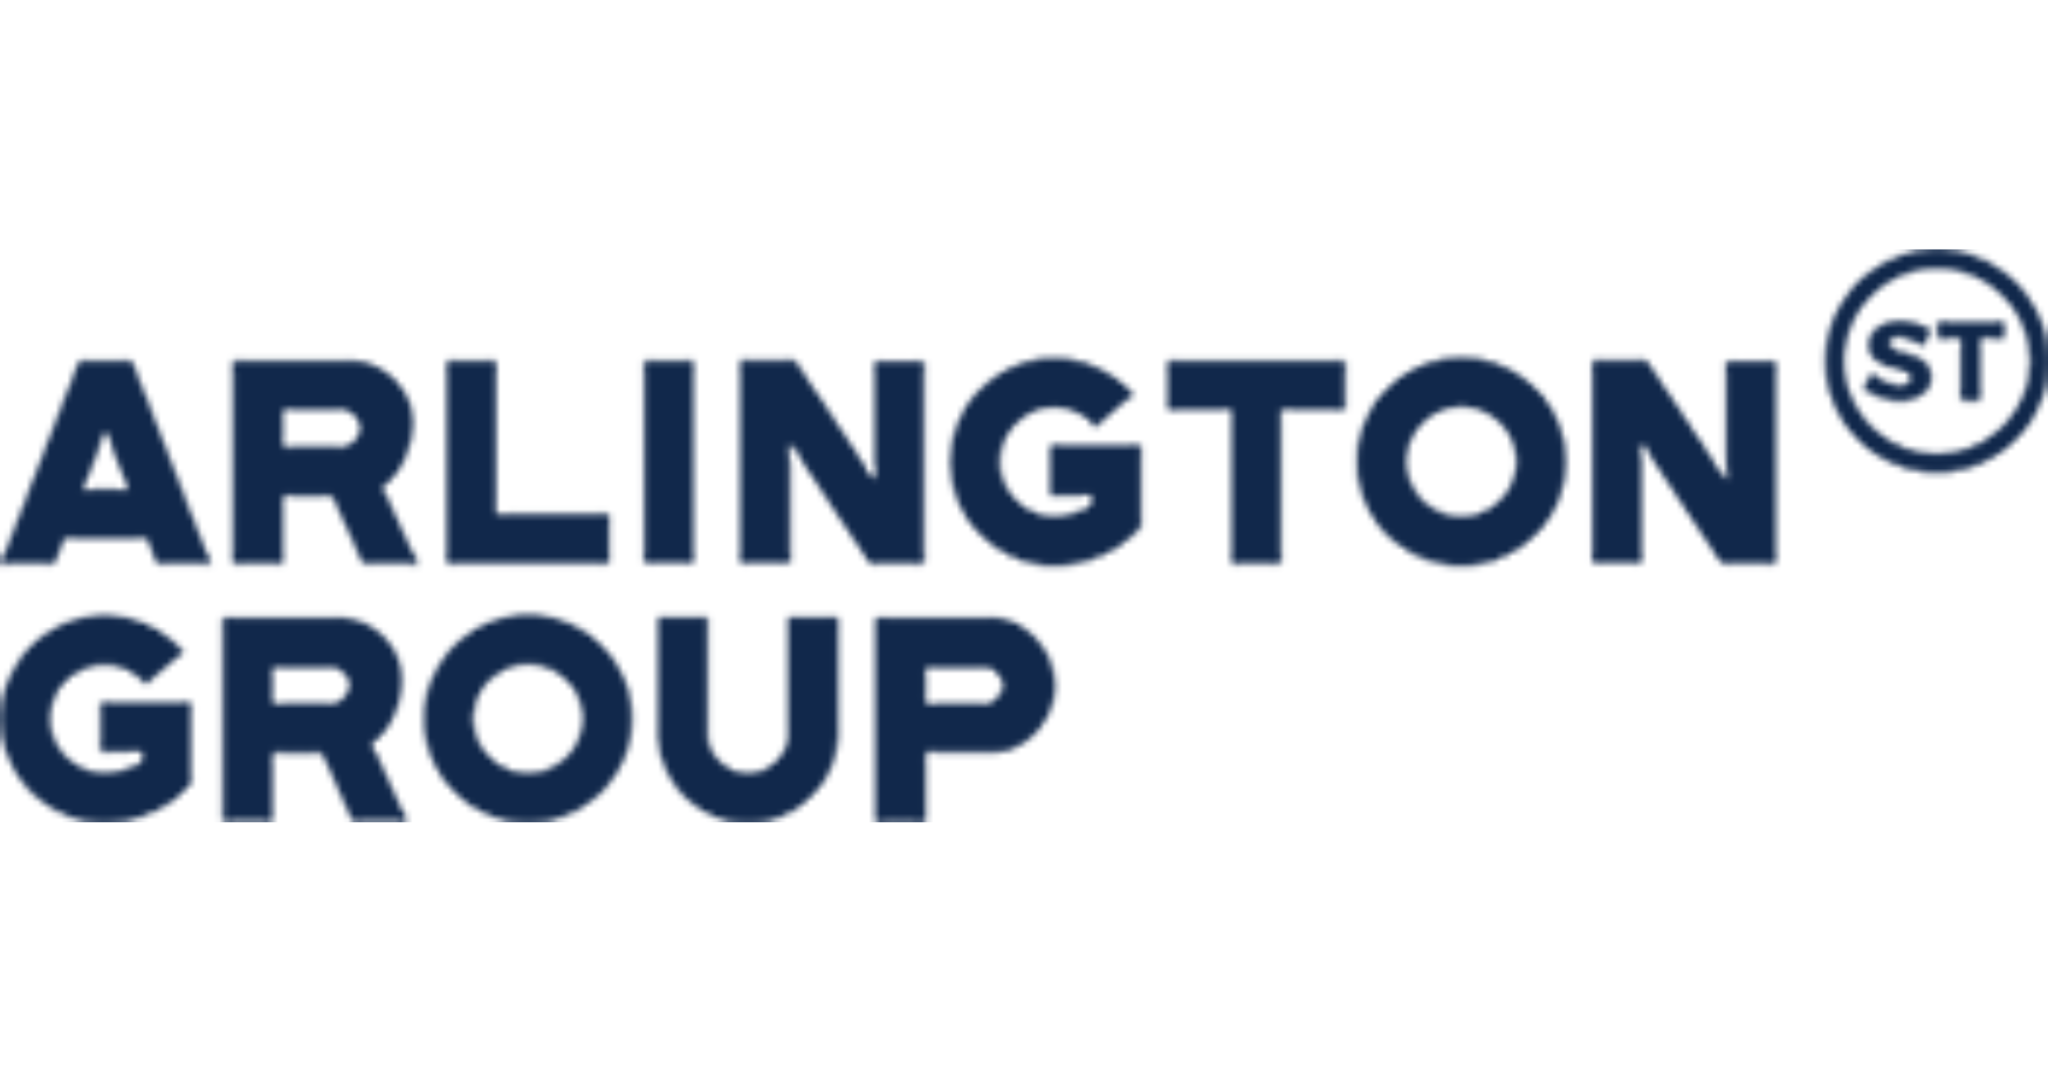 The Arlington Group Logo